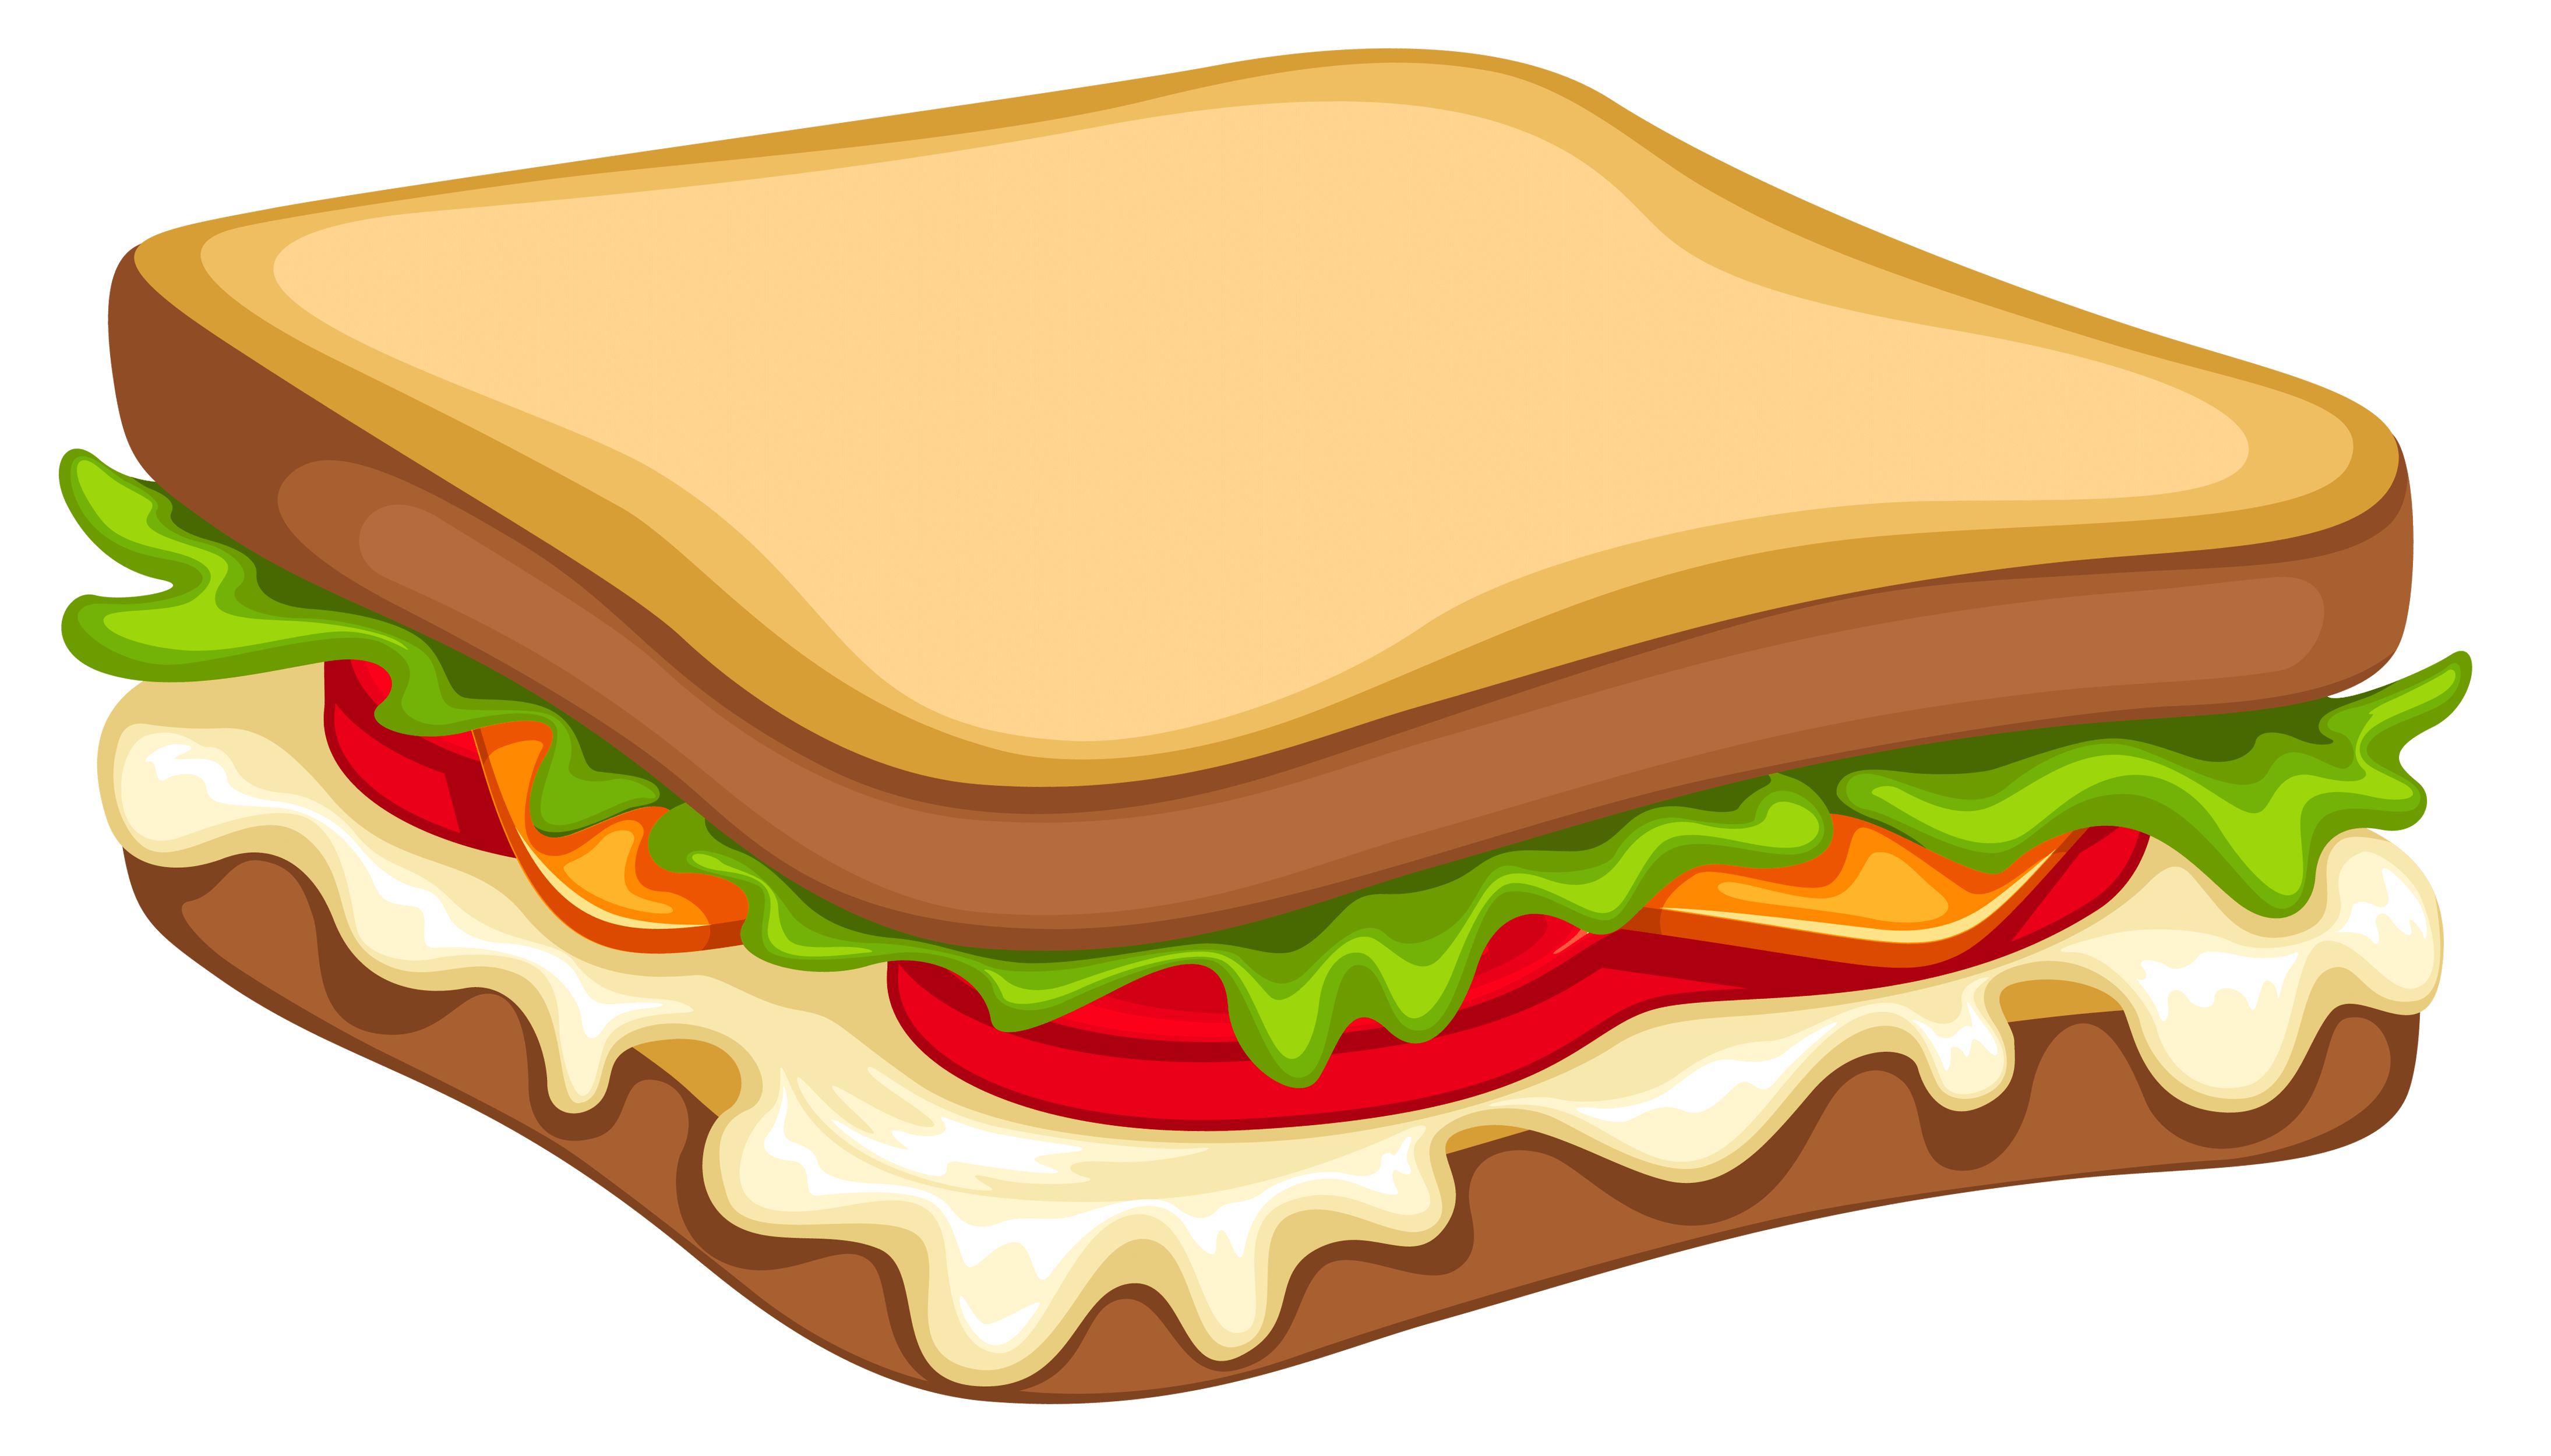 sandwich clipart veggie sandwich